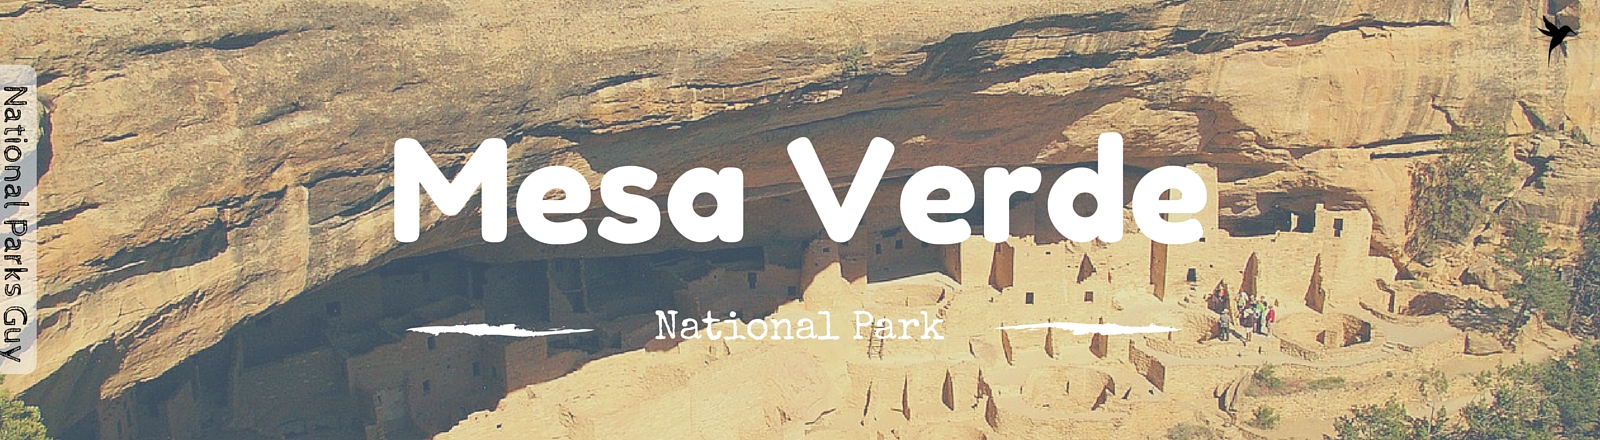 Mesa Verde National Park, USA, National Parks Guy, Stories, Tales, Adventures, Wildlife